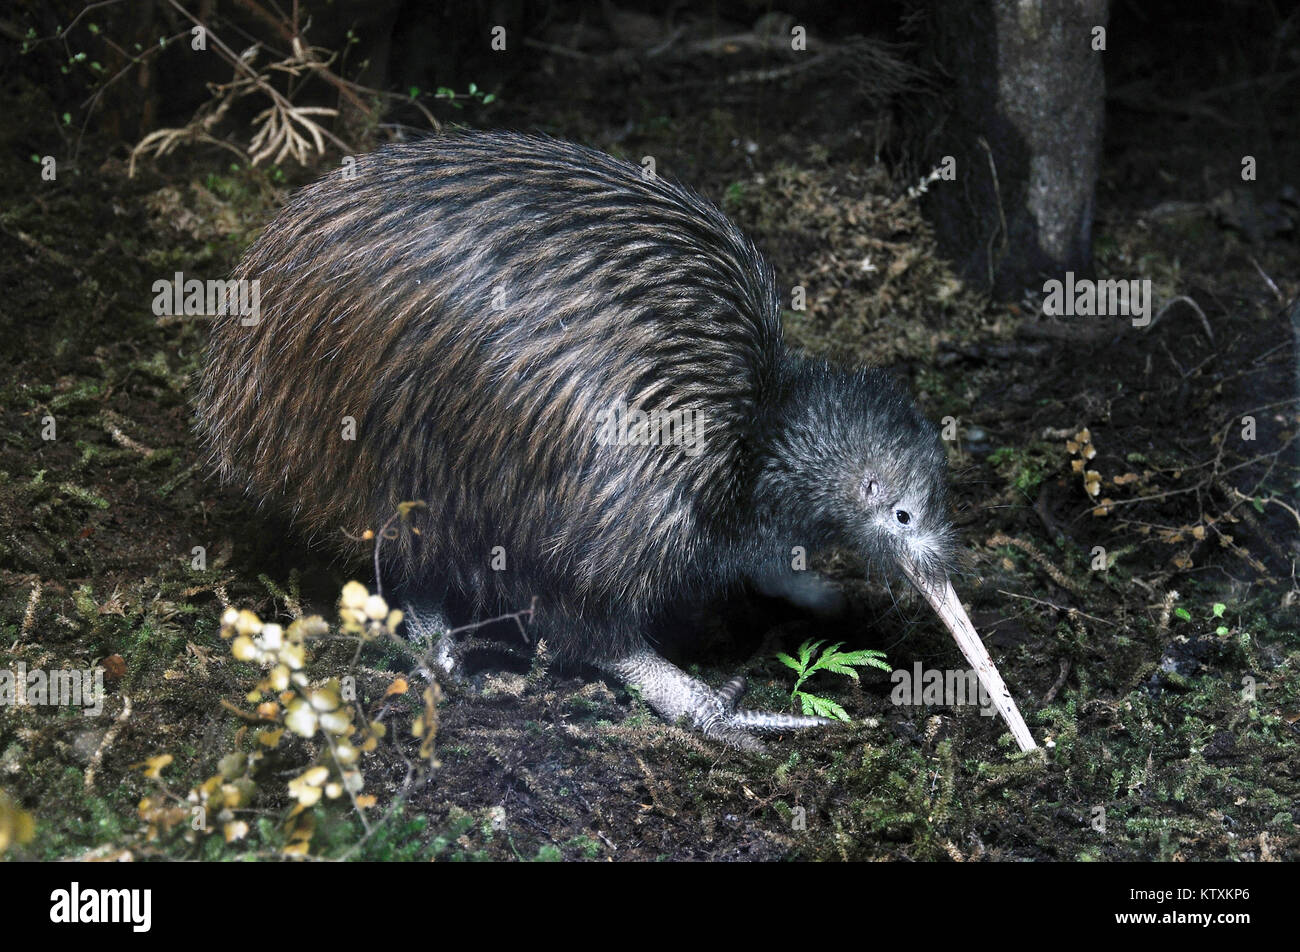 North Island brown kiwi, Apteryx australis, searching for food in New Zealand bush setting Stock Photo